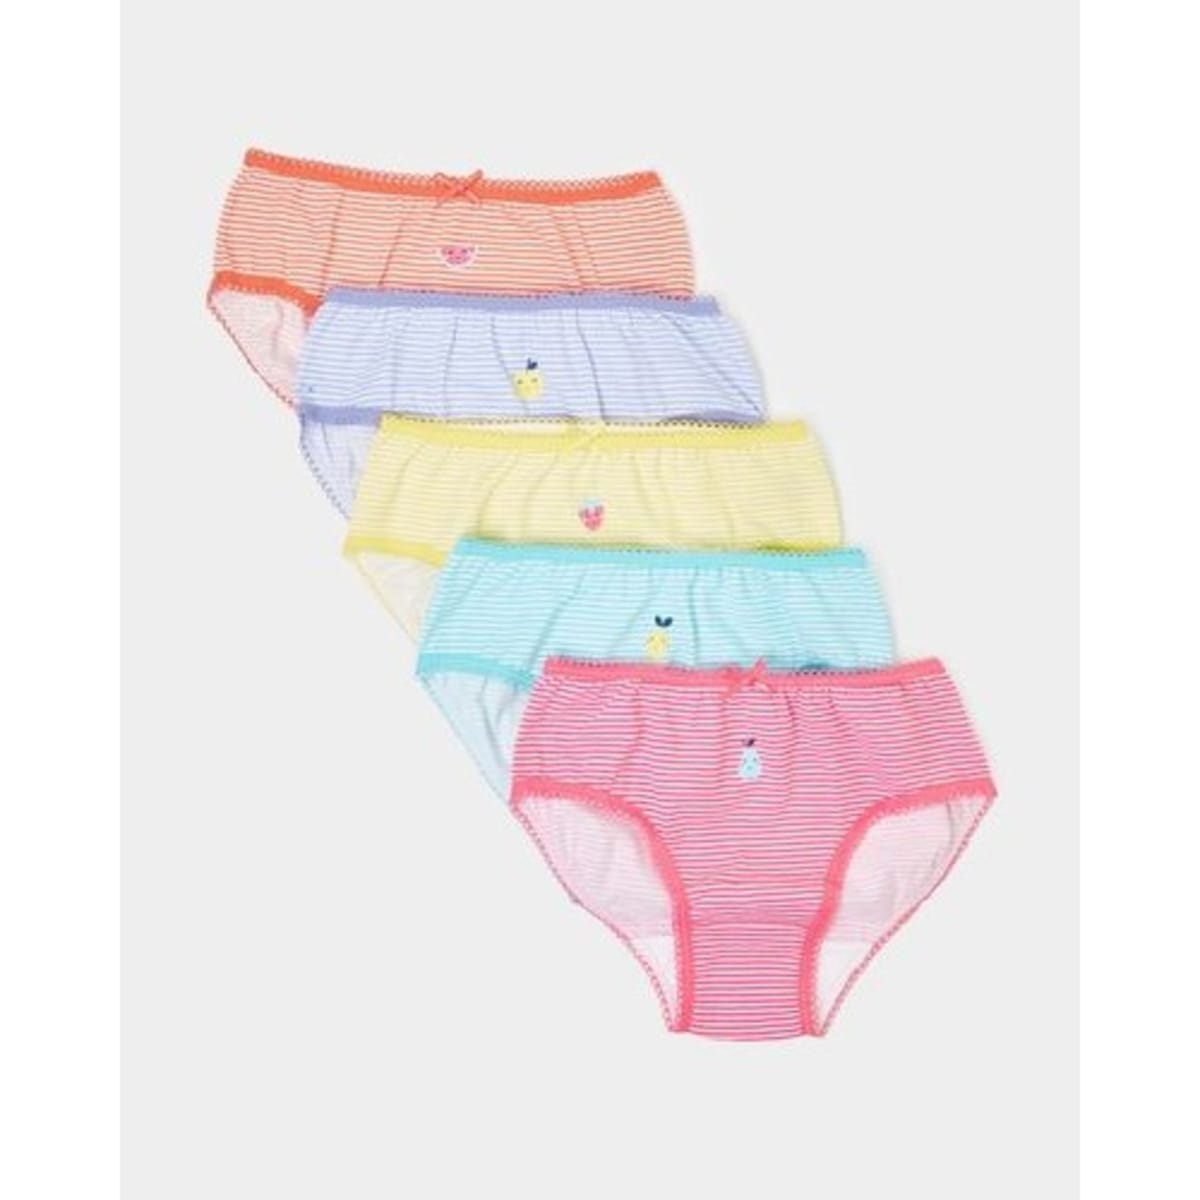 FRIENDS Girls Underwear Pack of 5 Multicolour 9-10 Years 